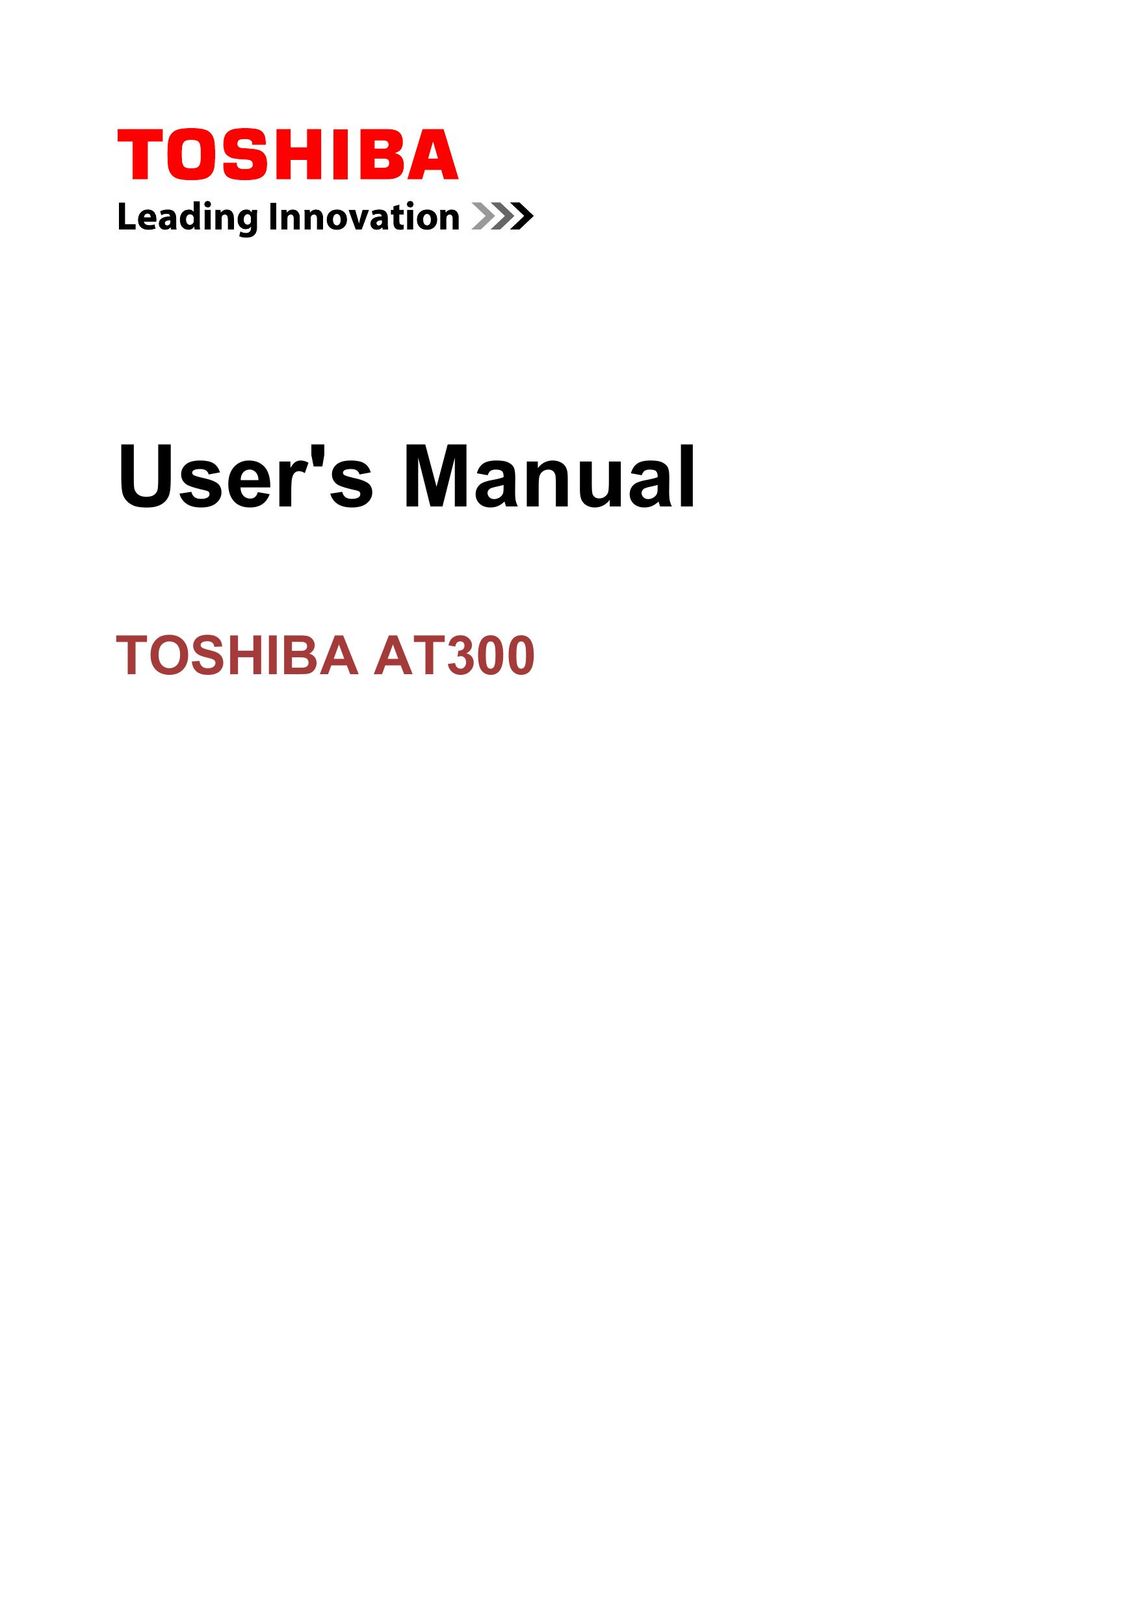 Toshiba AT300 Graphics Tablet User Manual